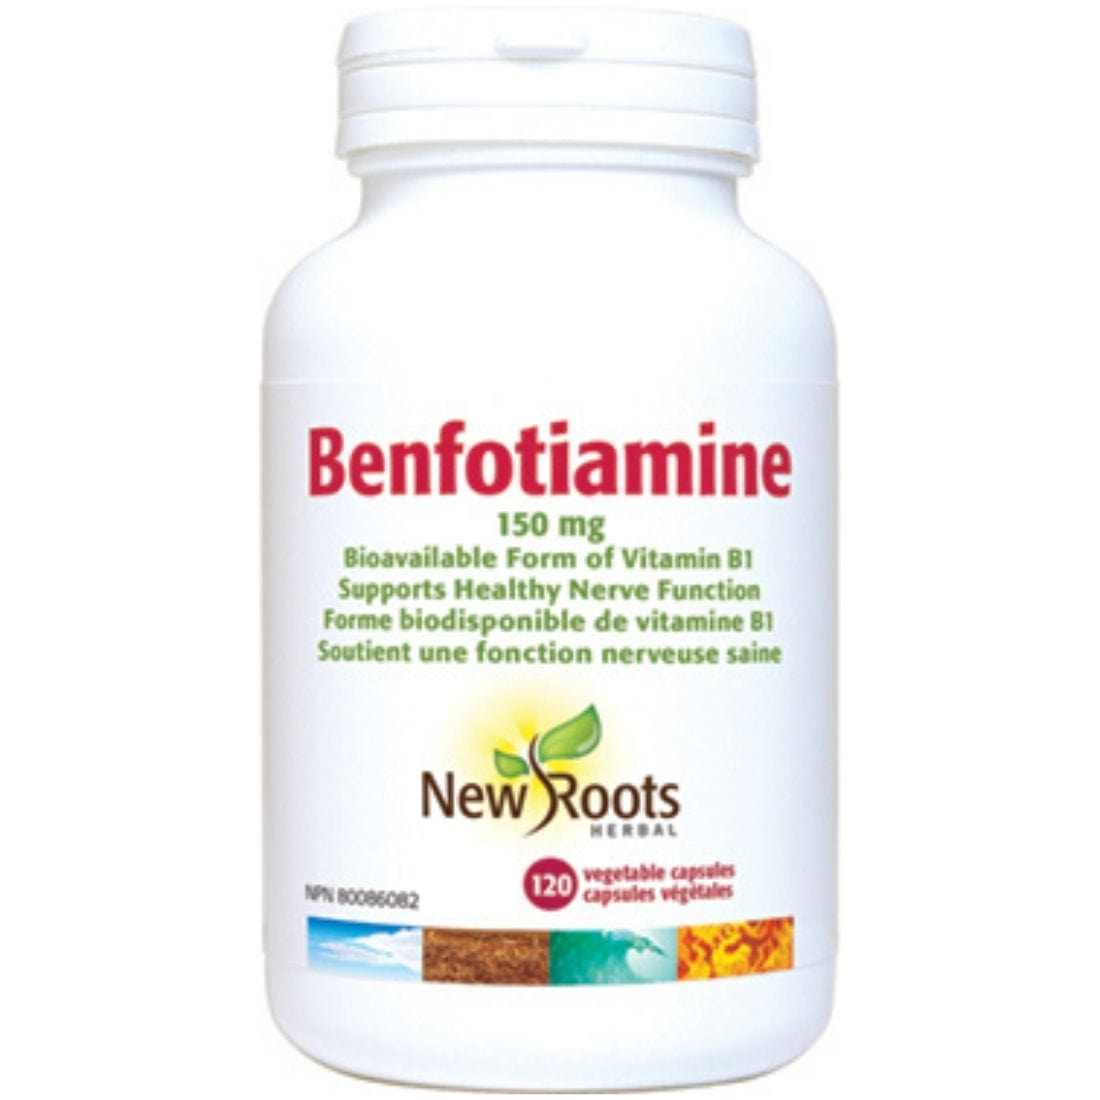 New Roots Benfotiamine Active Vitamin B1 150mg